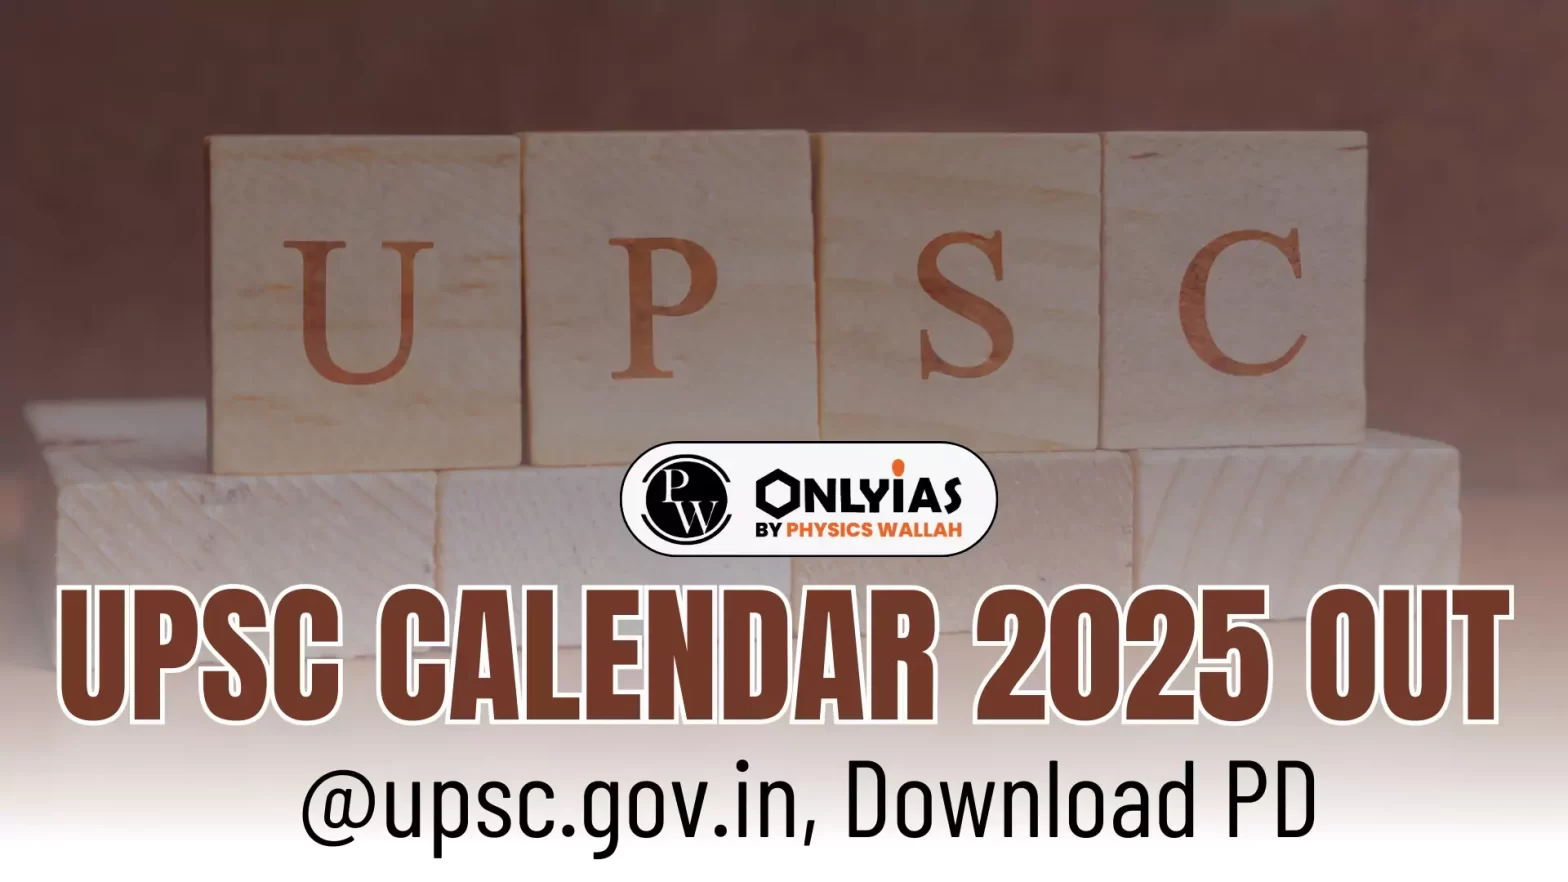 UPSC Calendar 2025 Out @upsc.gov.in, Download PDF